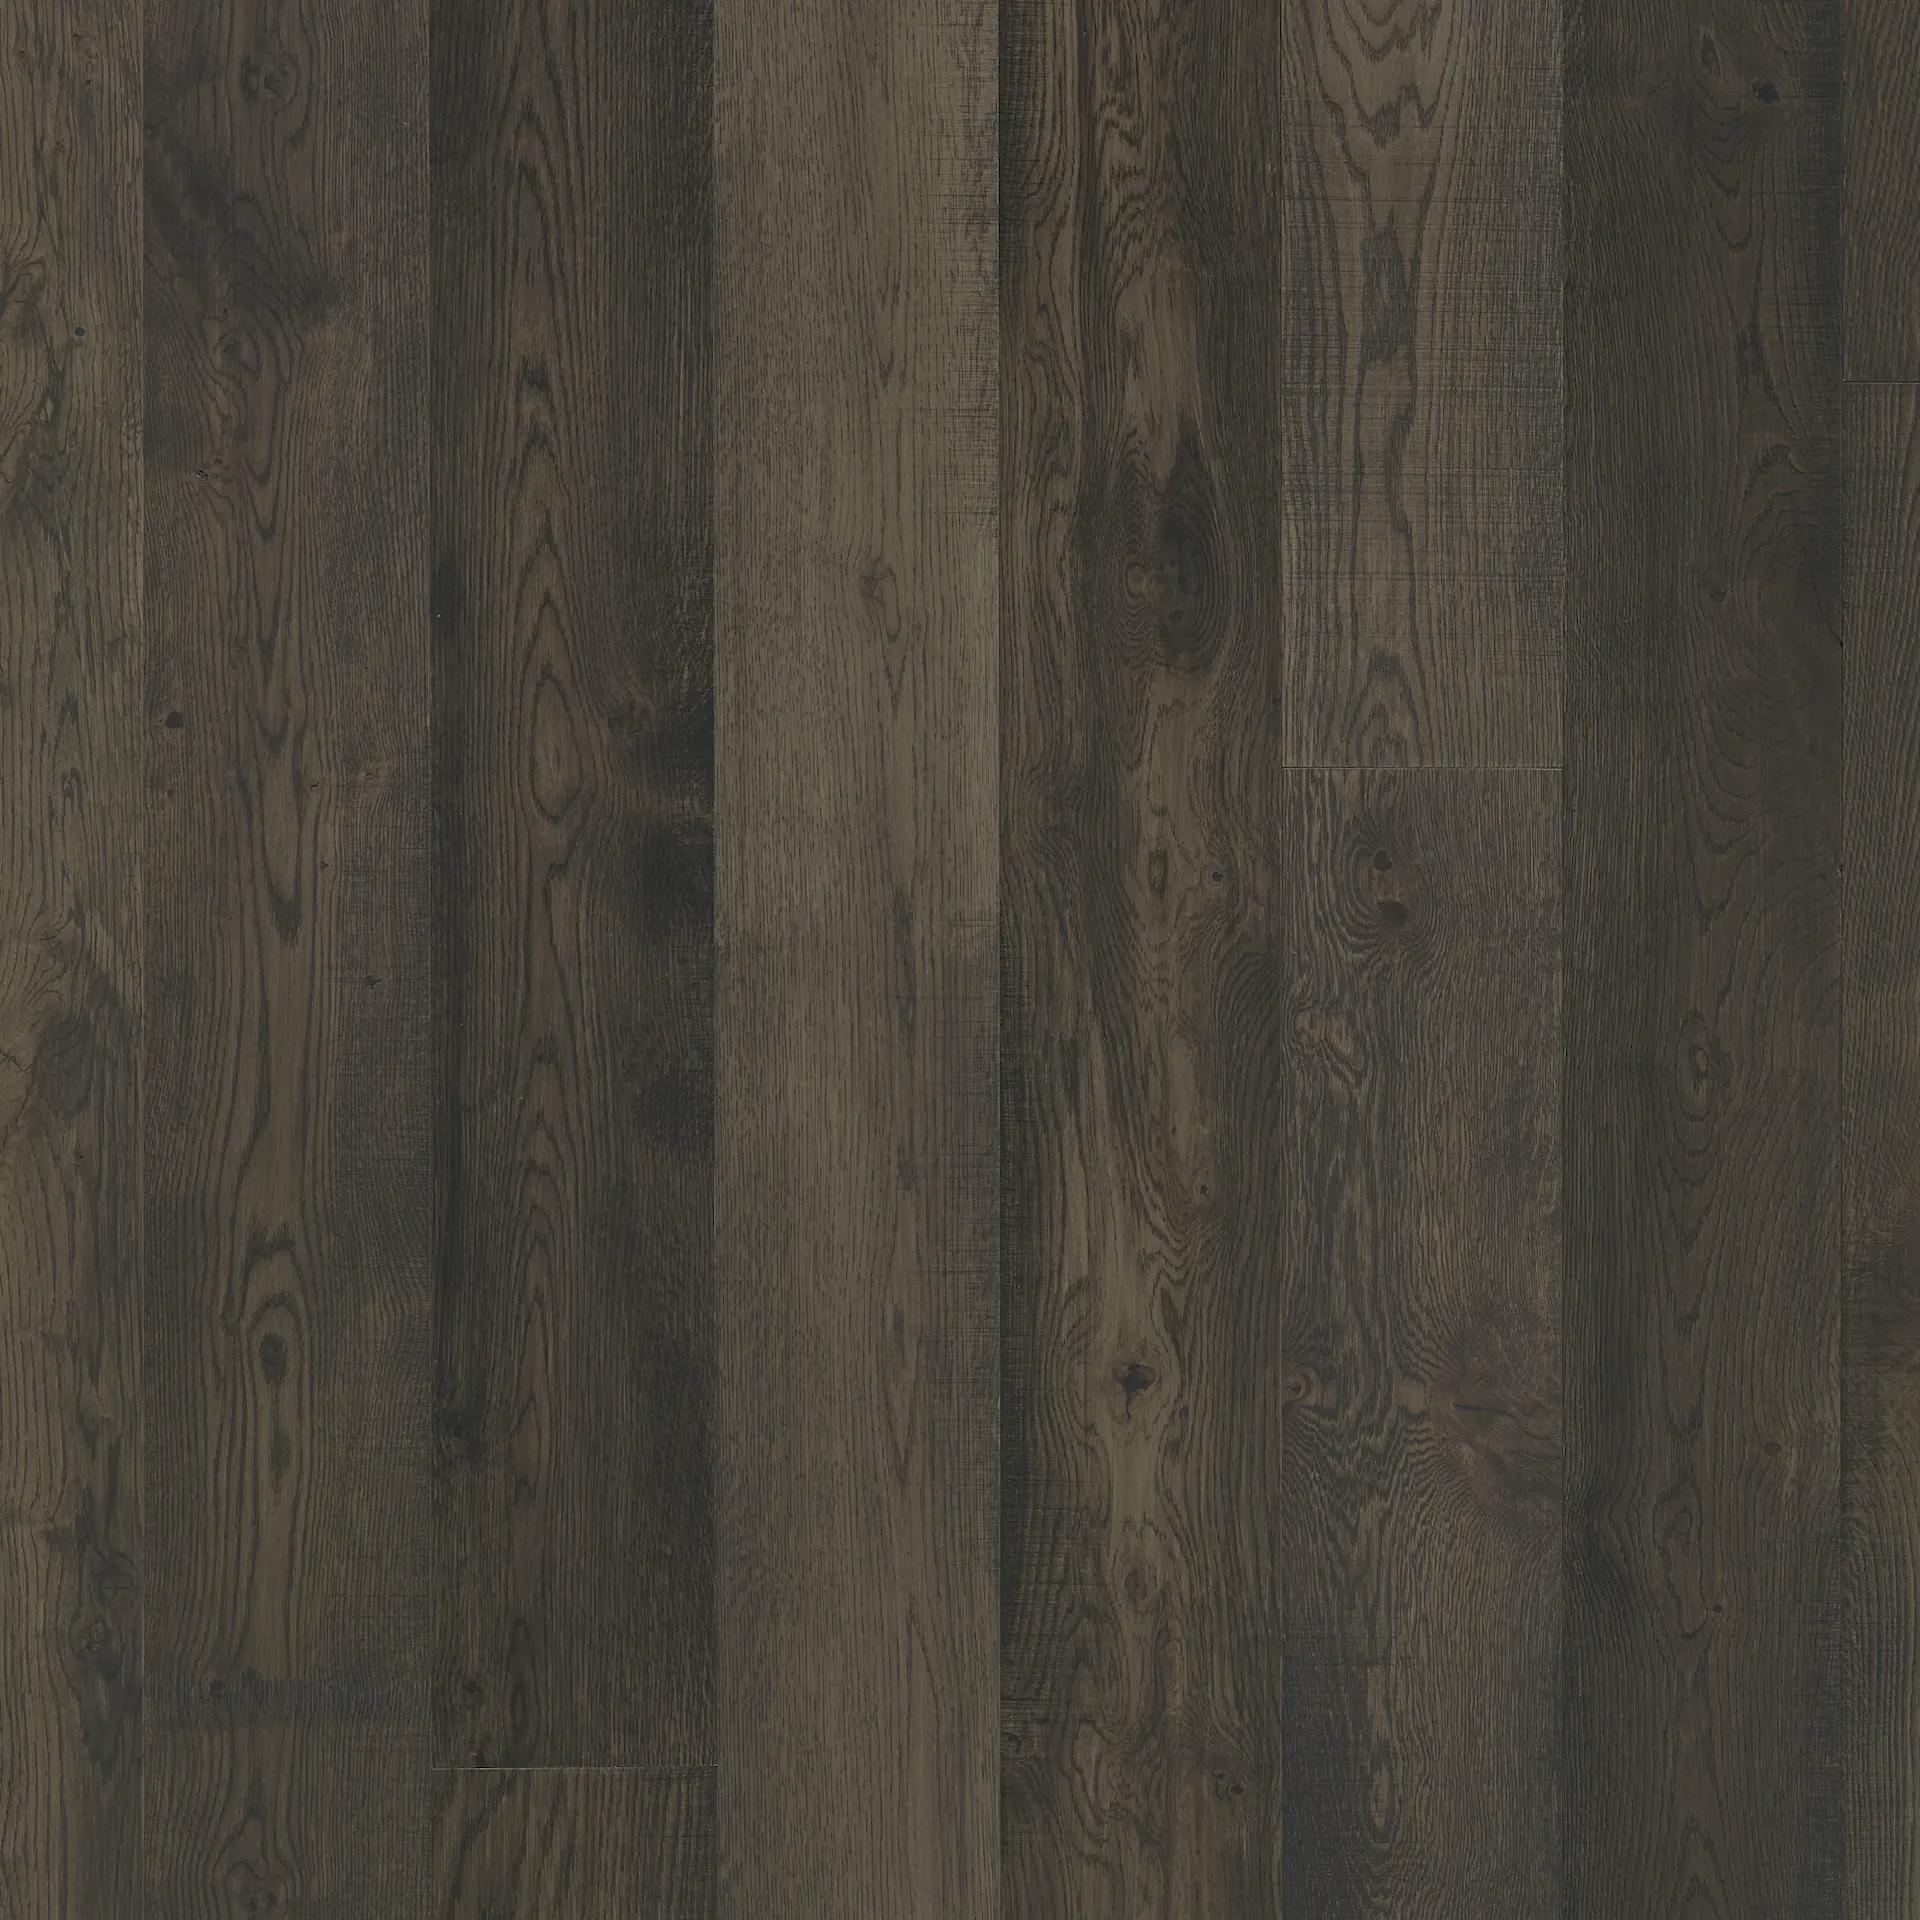 smokehouse oak flooring - What is oak LVT flooring